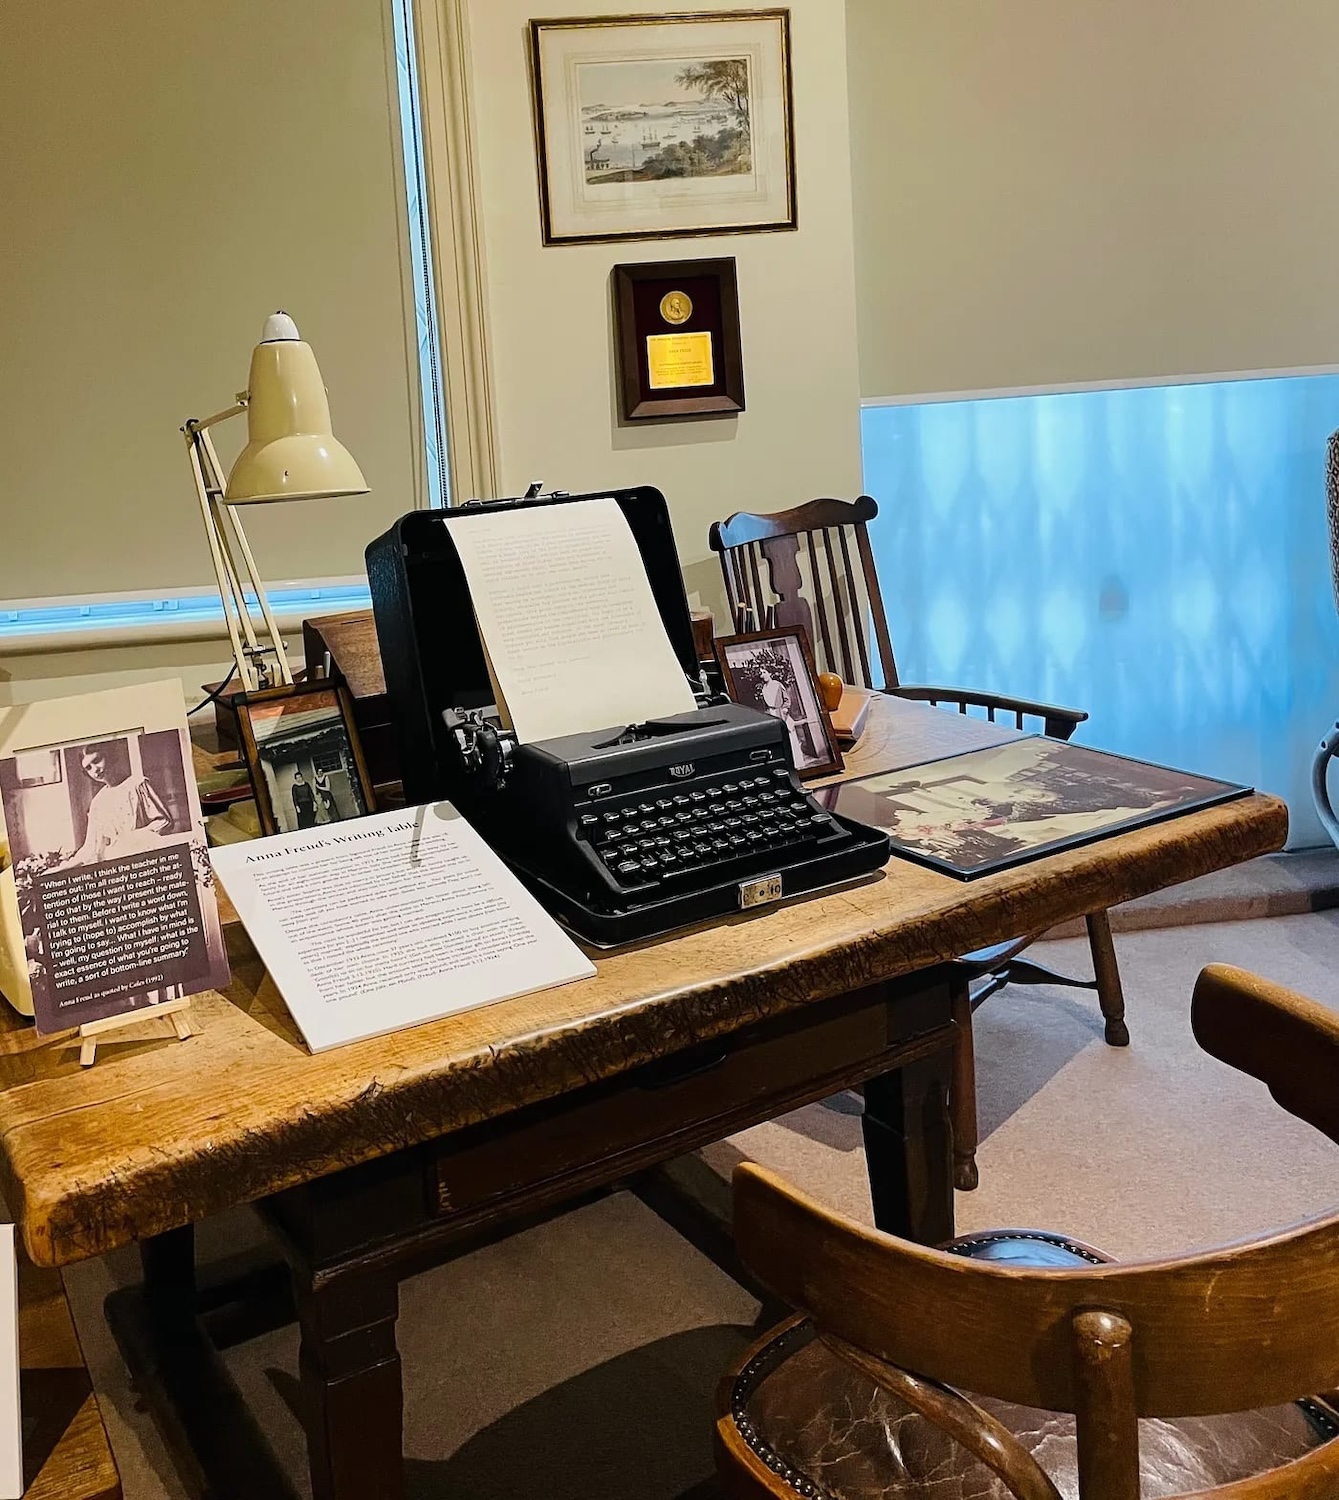 Anna Freud’s desk